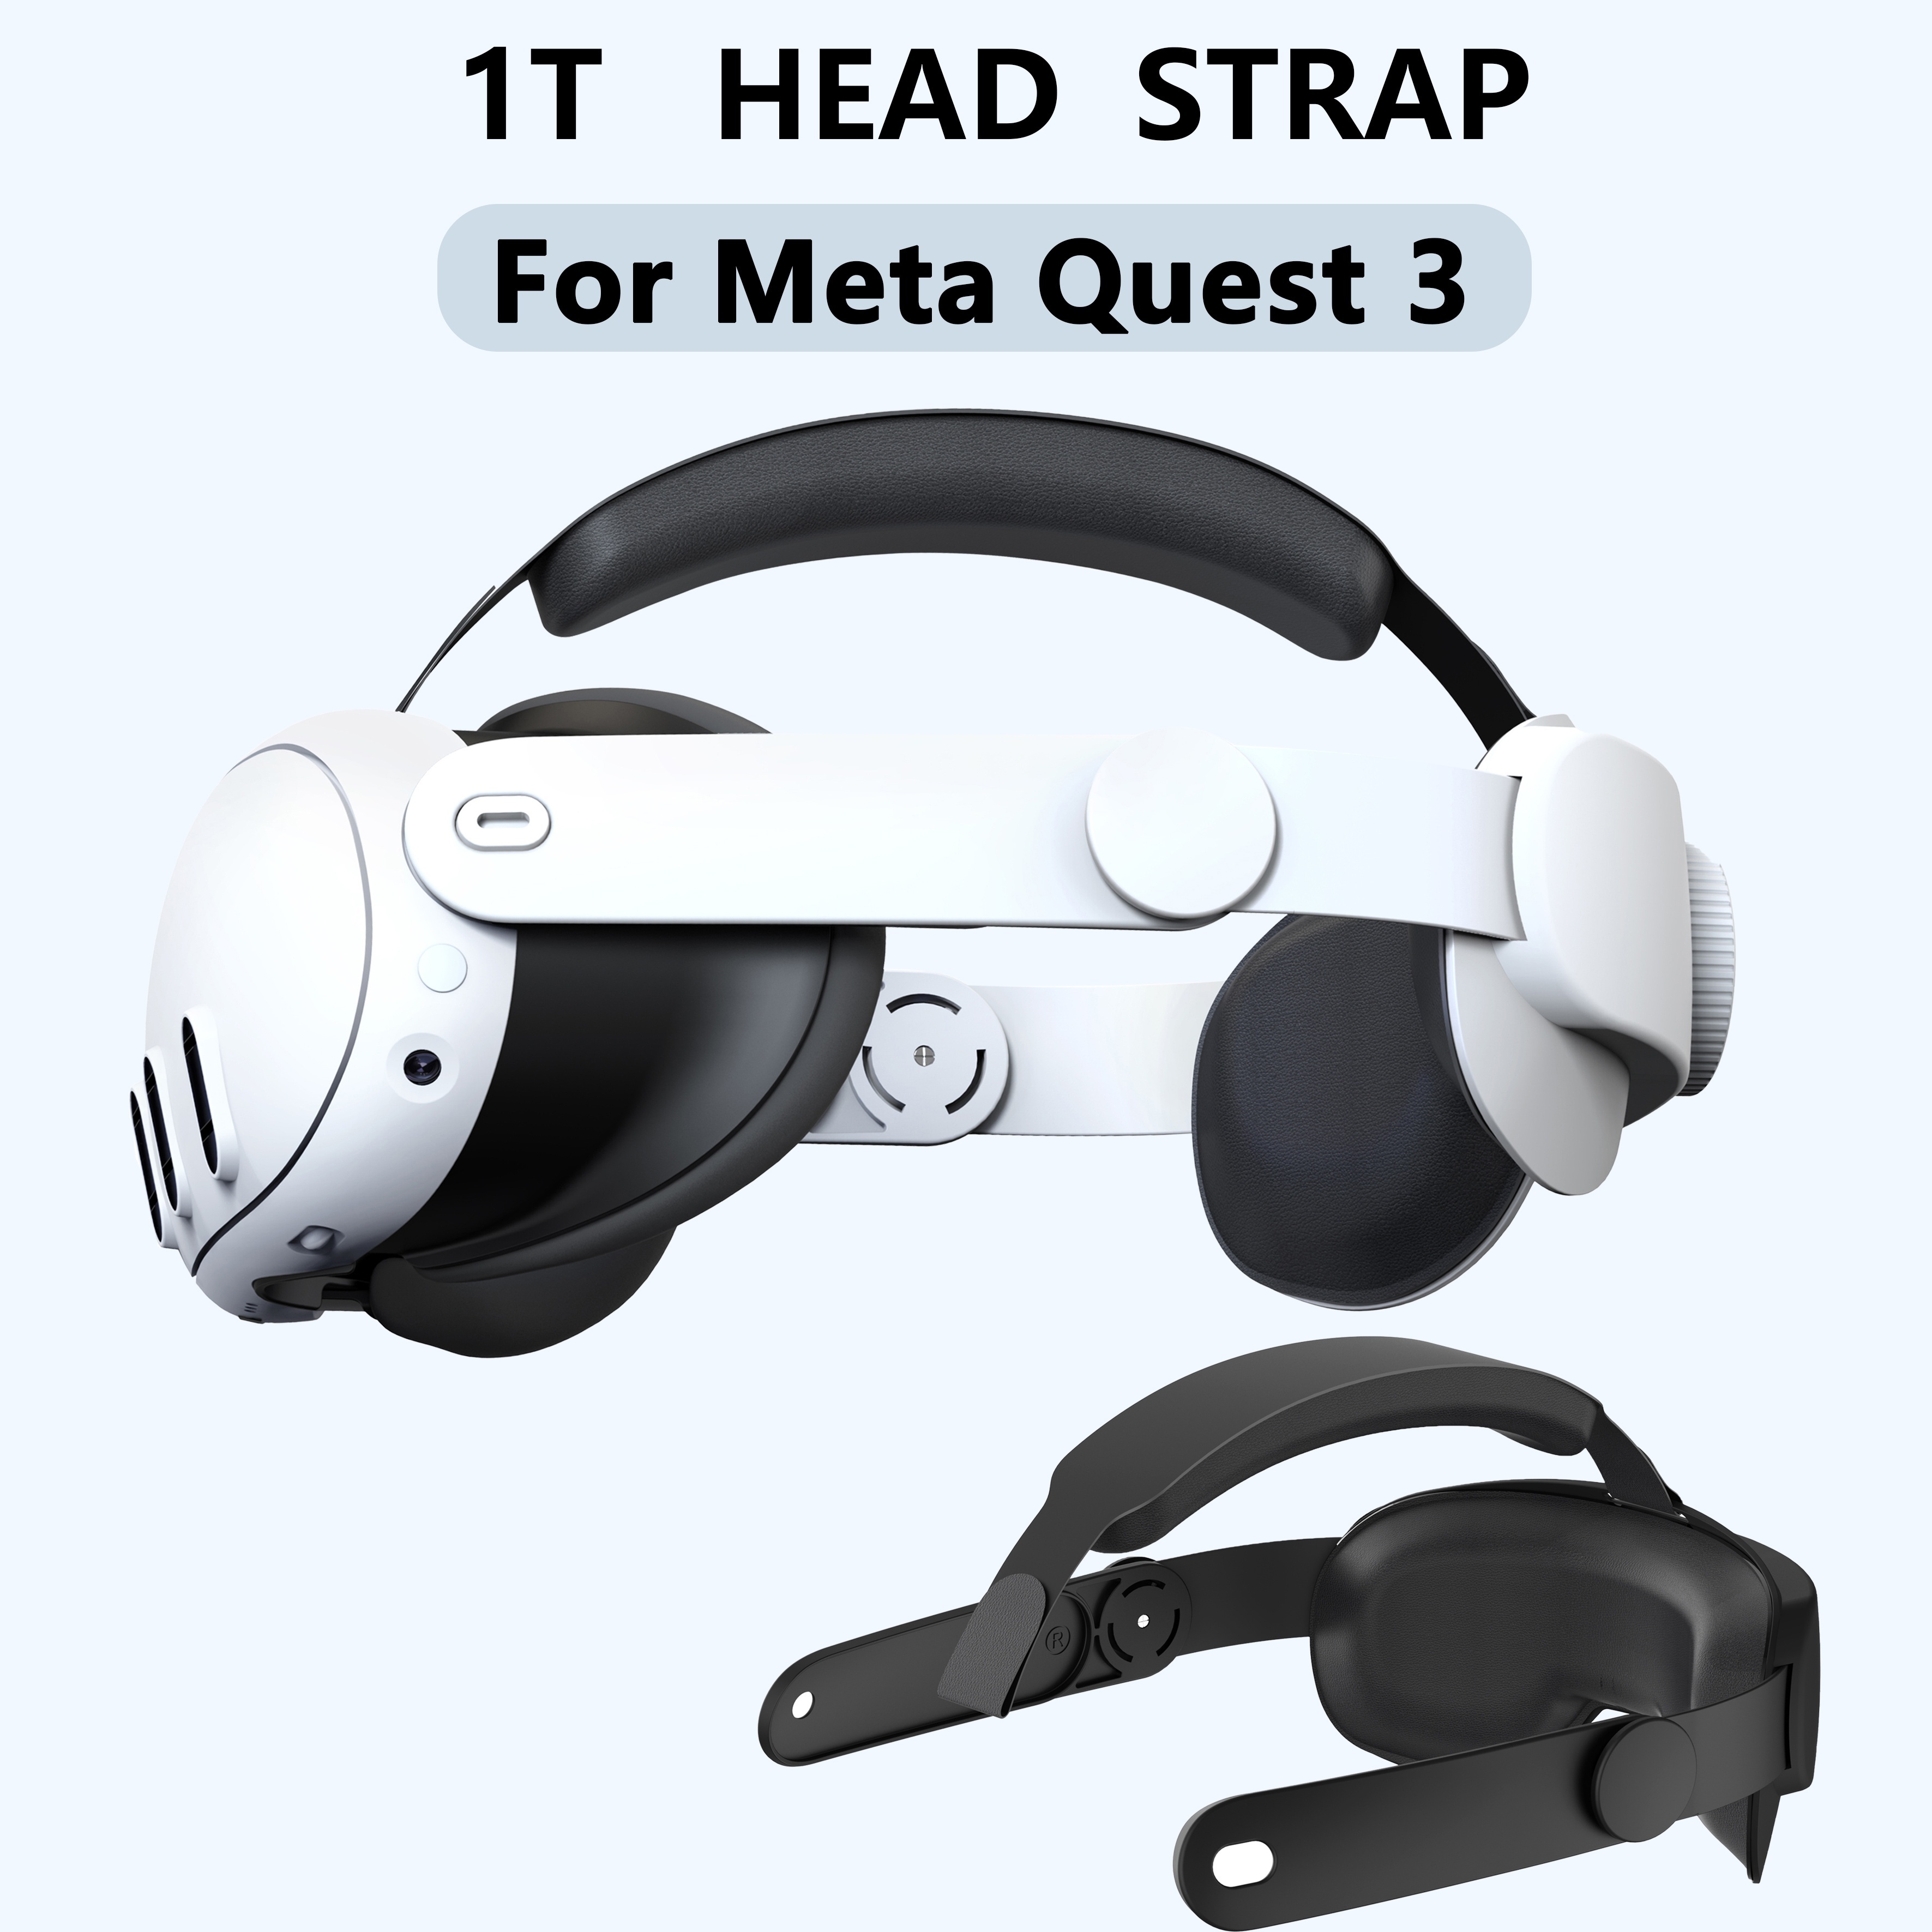 Adjustable Headband Head Strap For Oculus-Quest 3 VR Headset